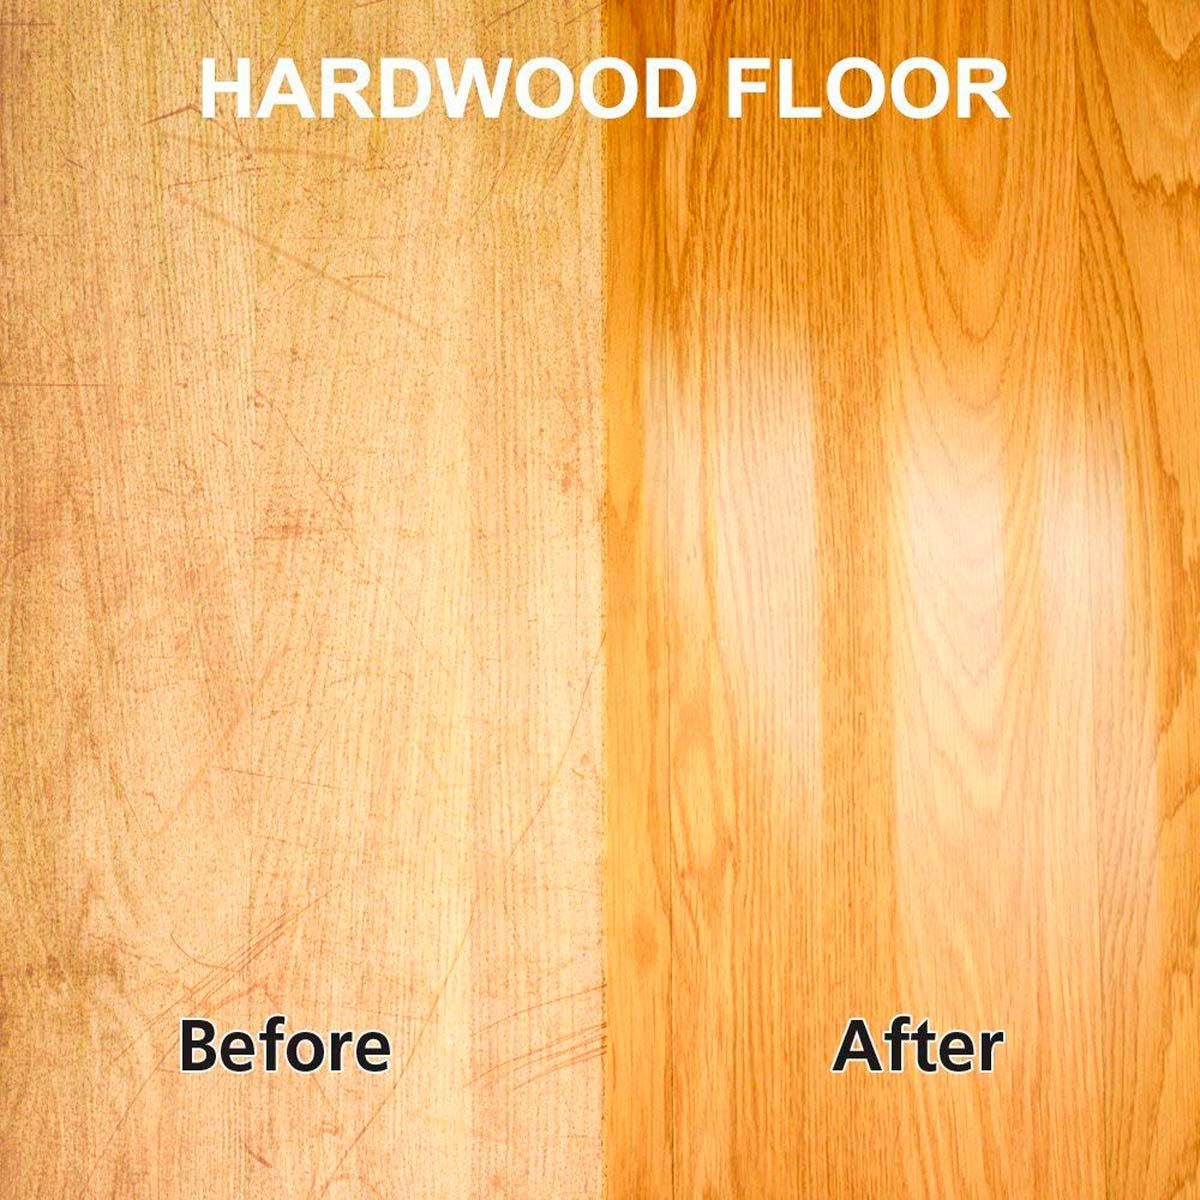 Want Shiny Hardwood Floors? Here's How to Rejuvenate Them